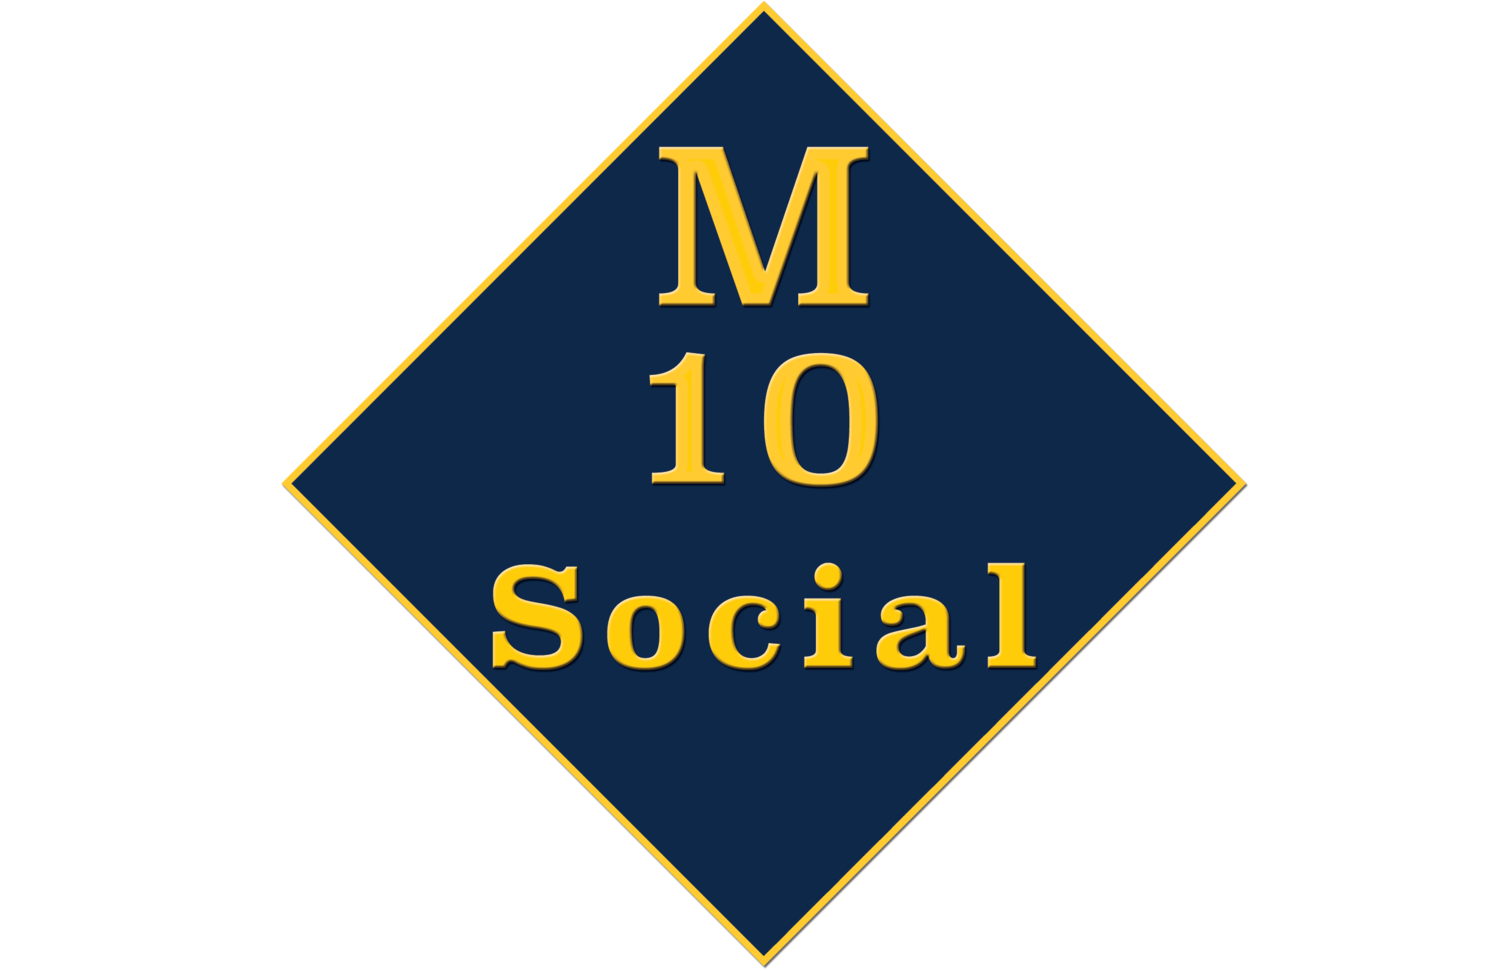 M10 Social